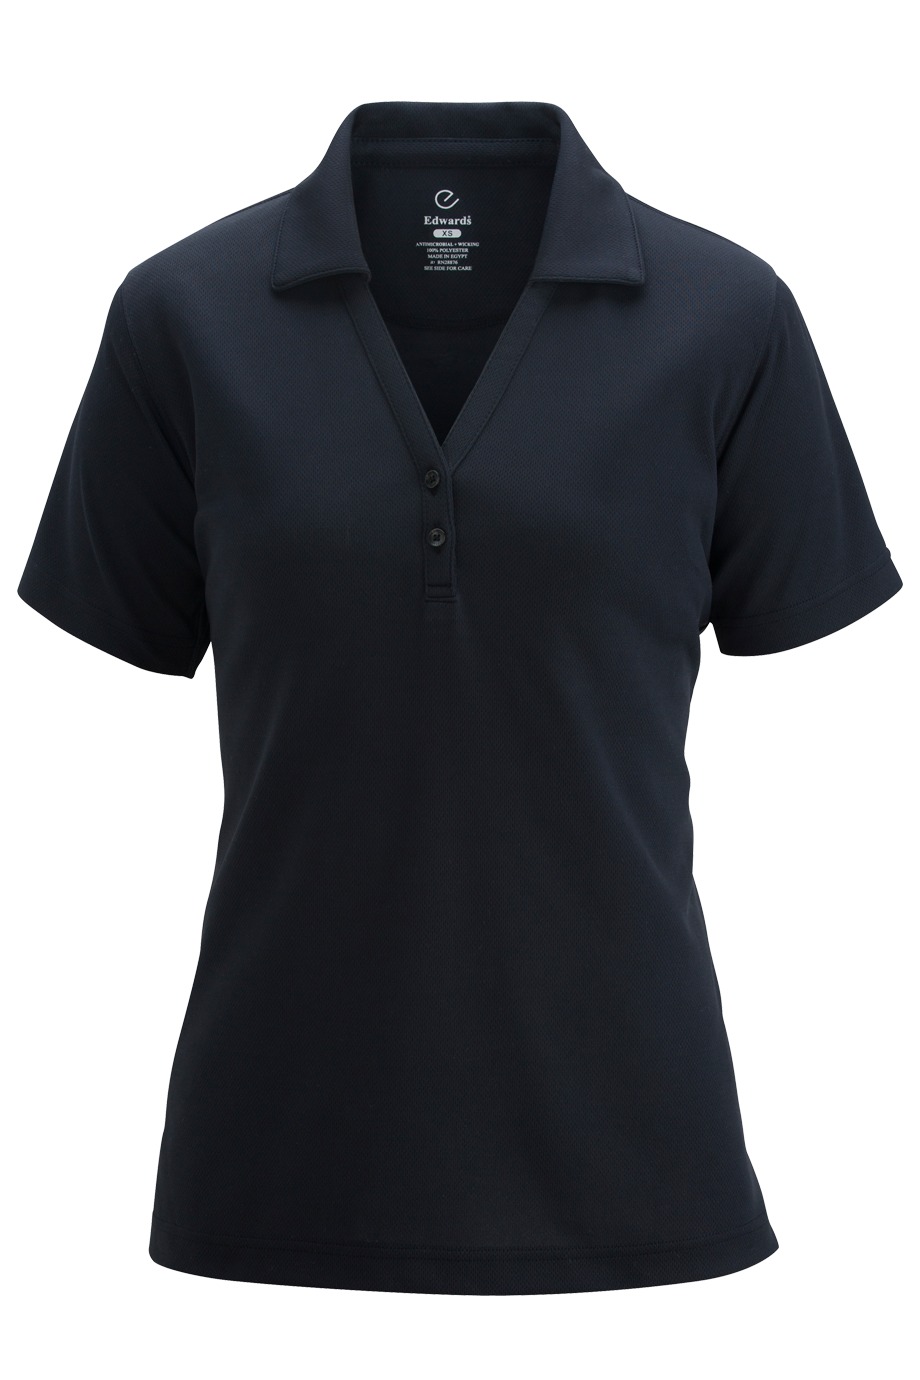 Edwards Garment 5583 - Ladies Johnny Collar Mesh Polo